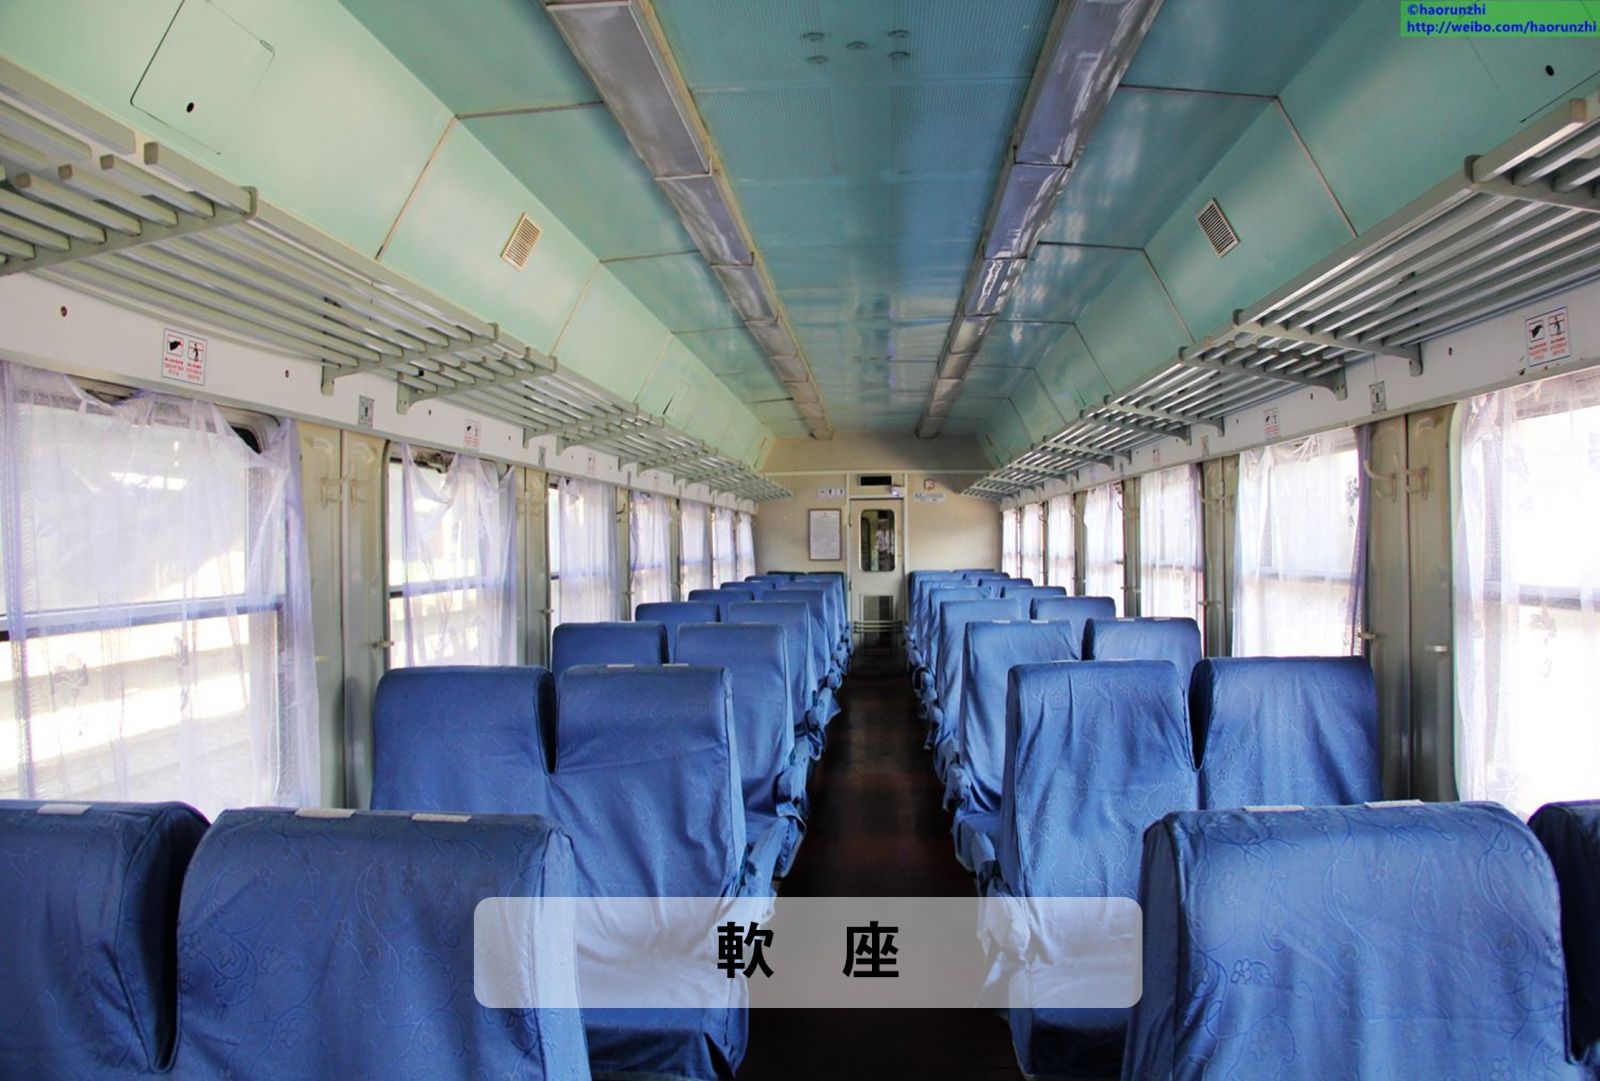 k开头火车硬座座位图2车厢 火车车厢座位分布图 软卧 - 网络编辑之家